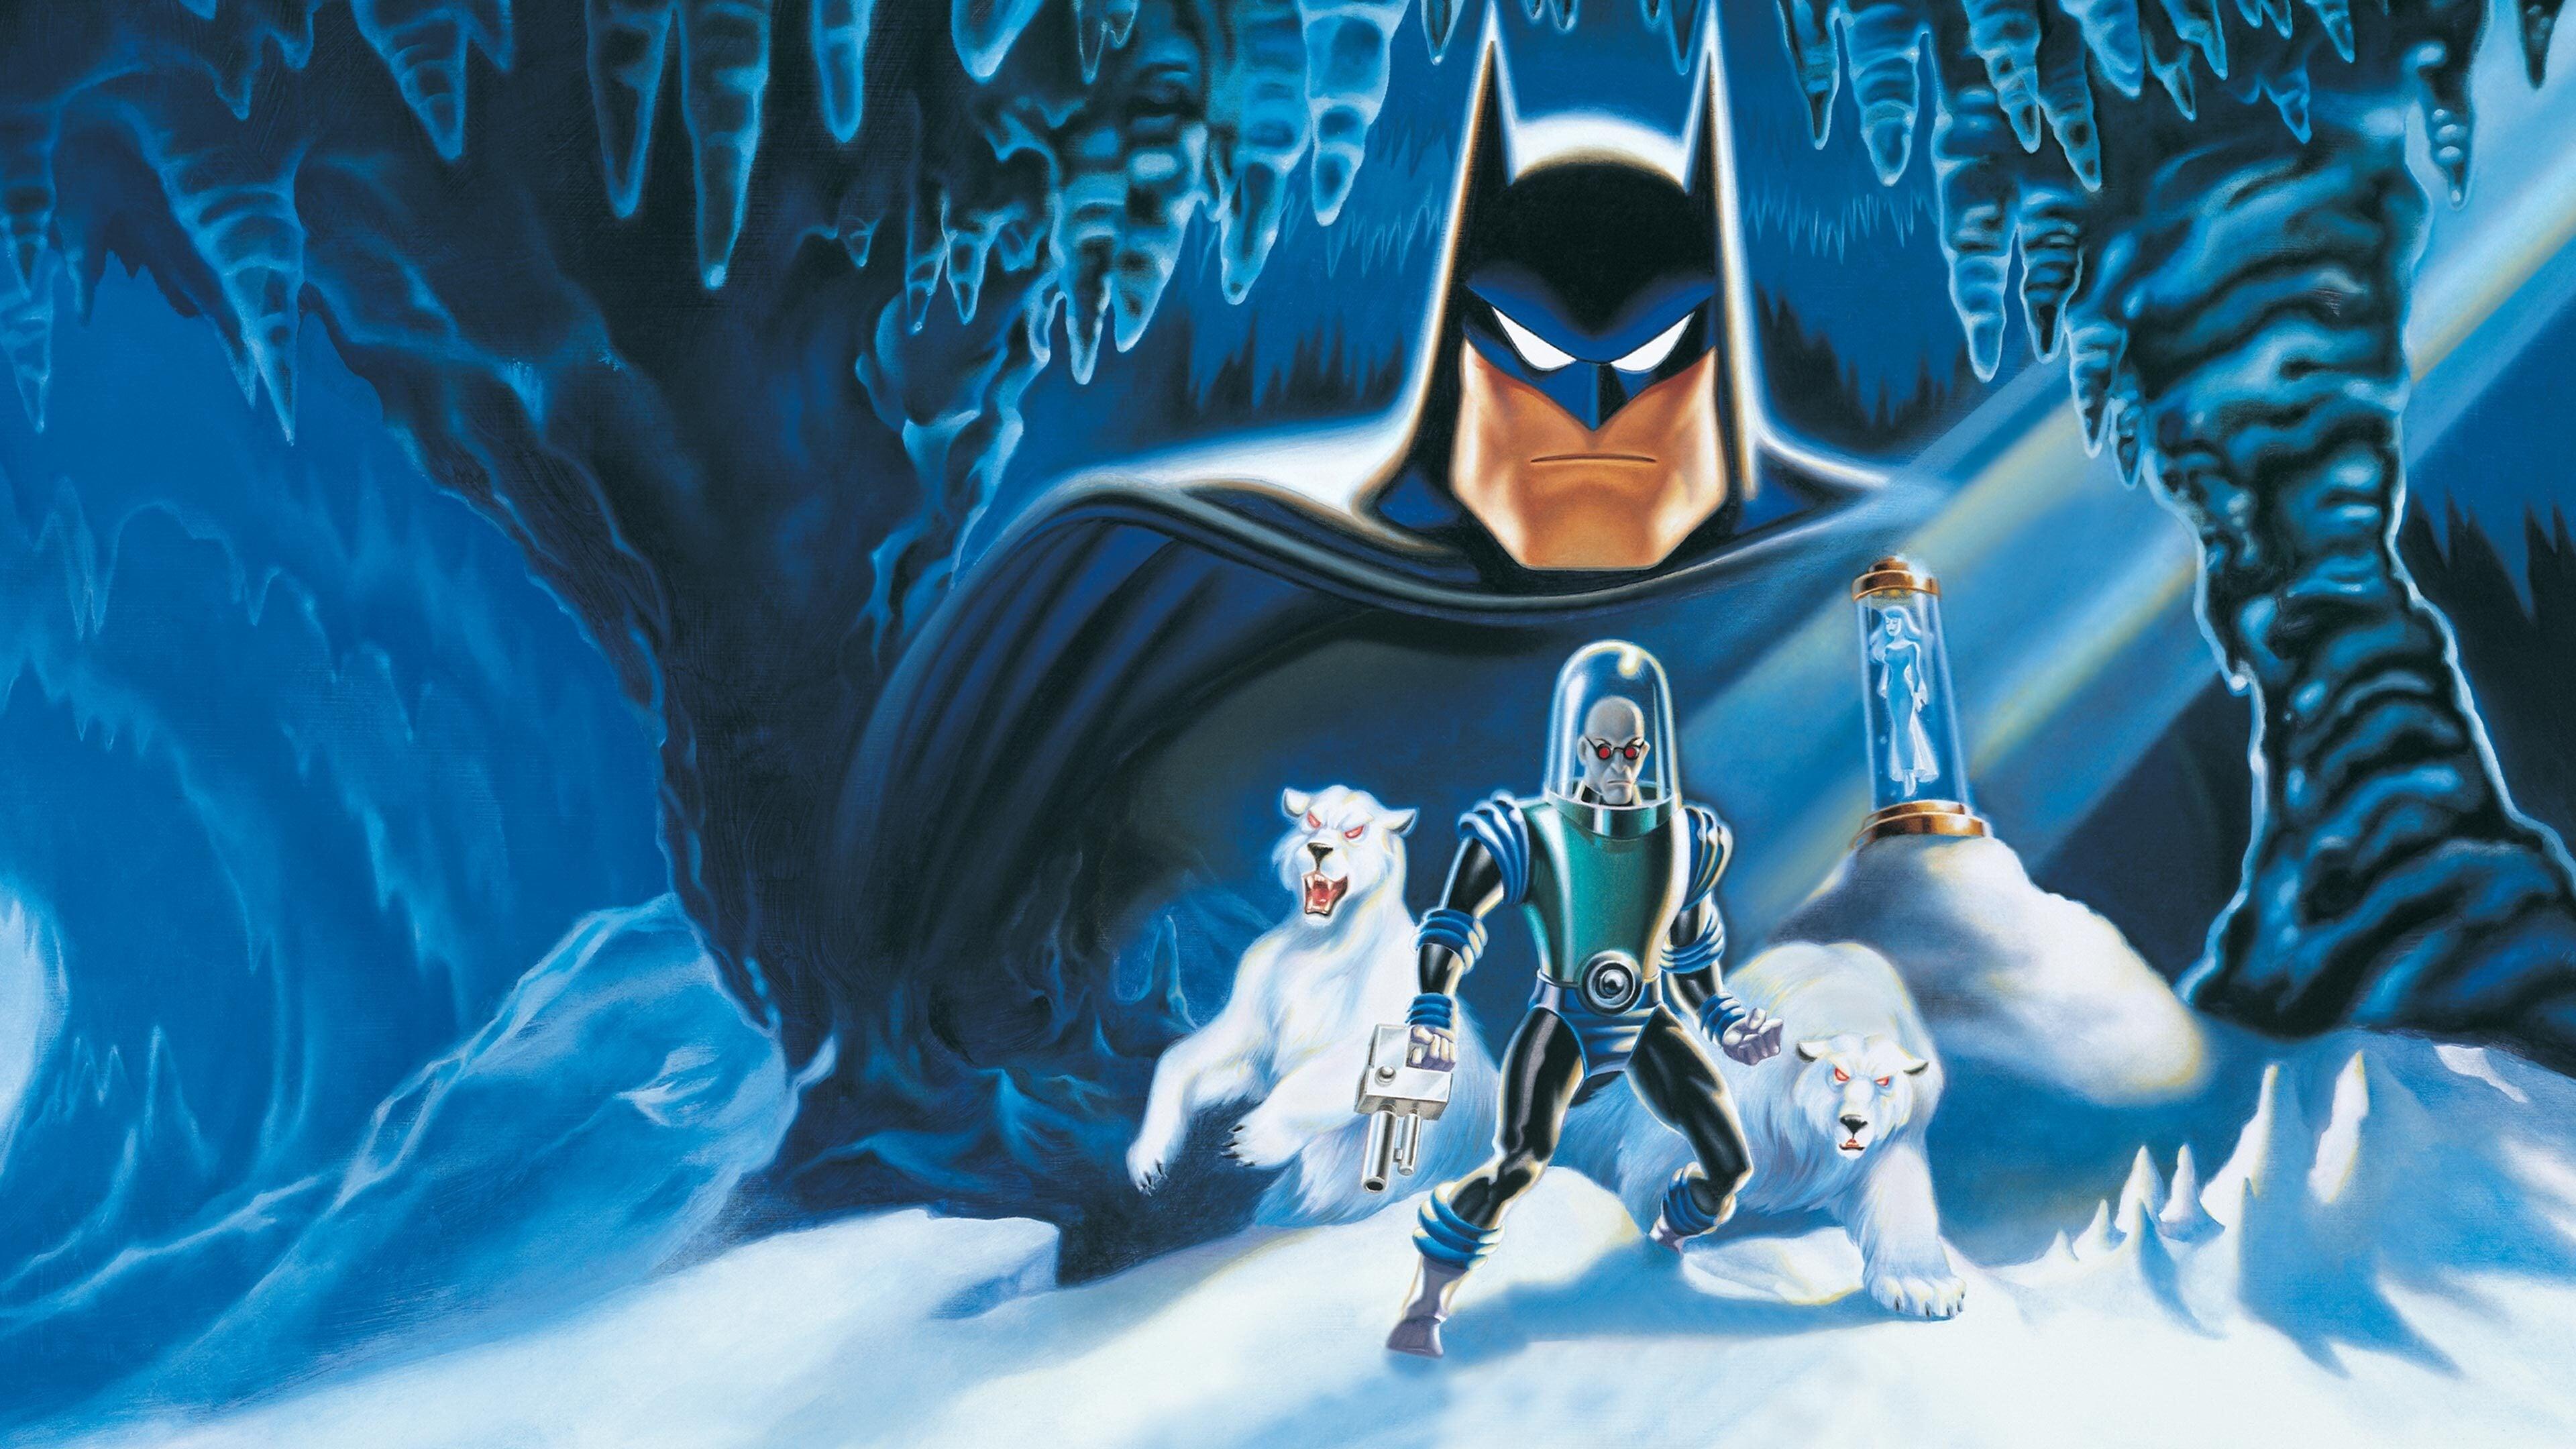 Batman & Mr. Freeze: SubZero backdrop